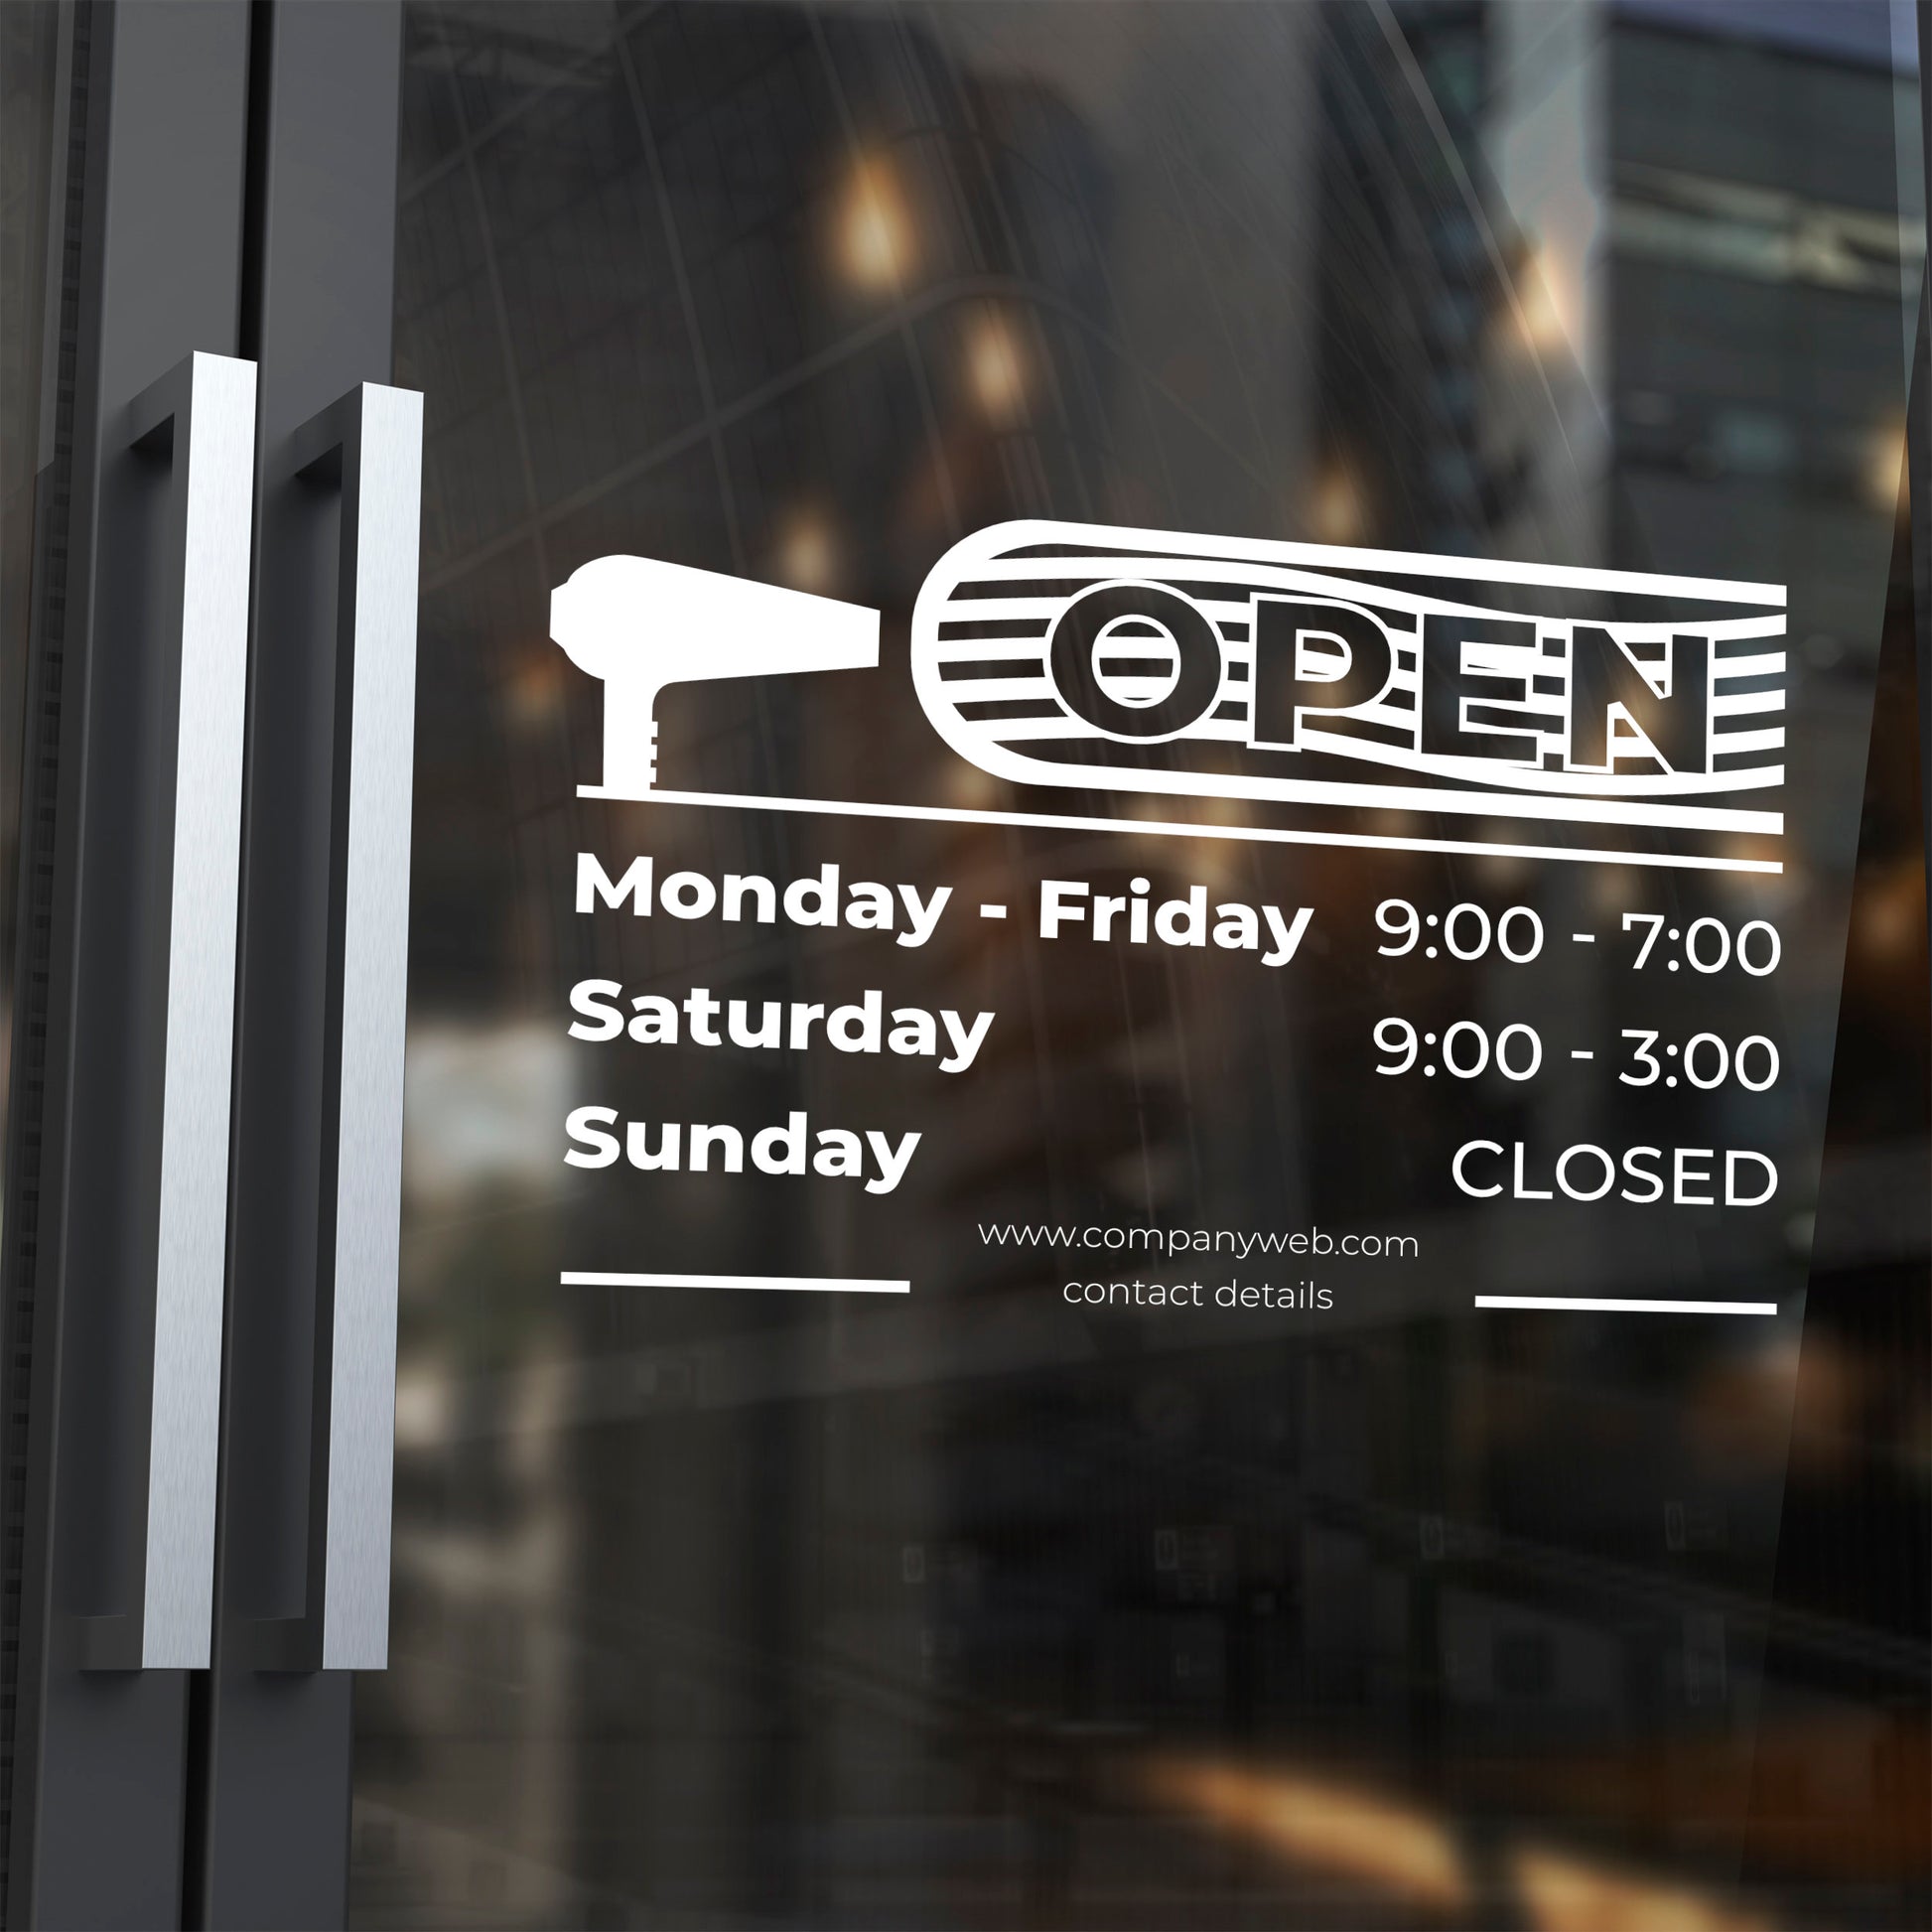 Hours of Operation - Vinyl on Barbershop Door Window - Website Store Hours - Your Company Logo Operation hours - Storefront Window Sticker